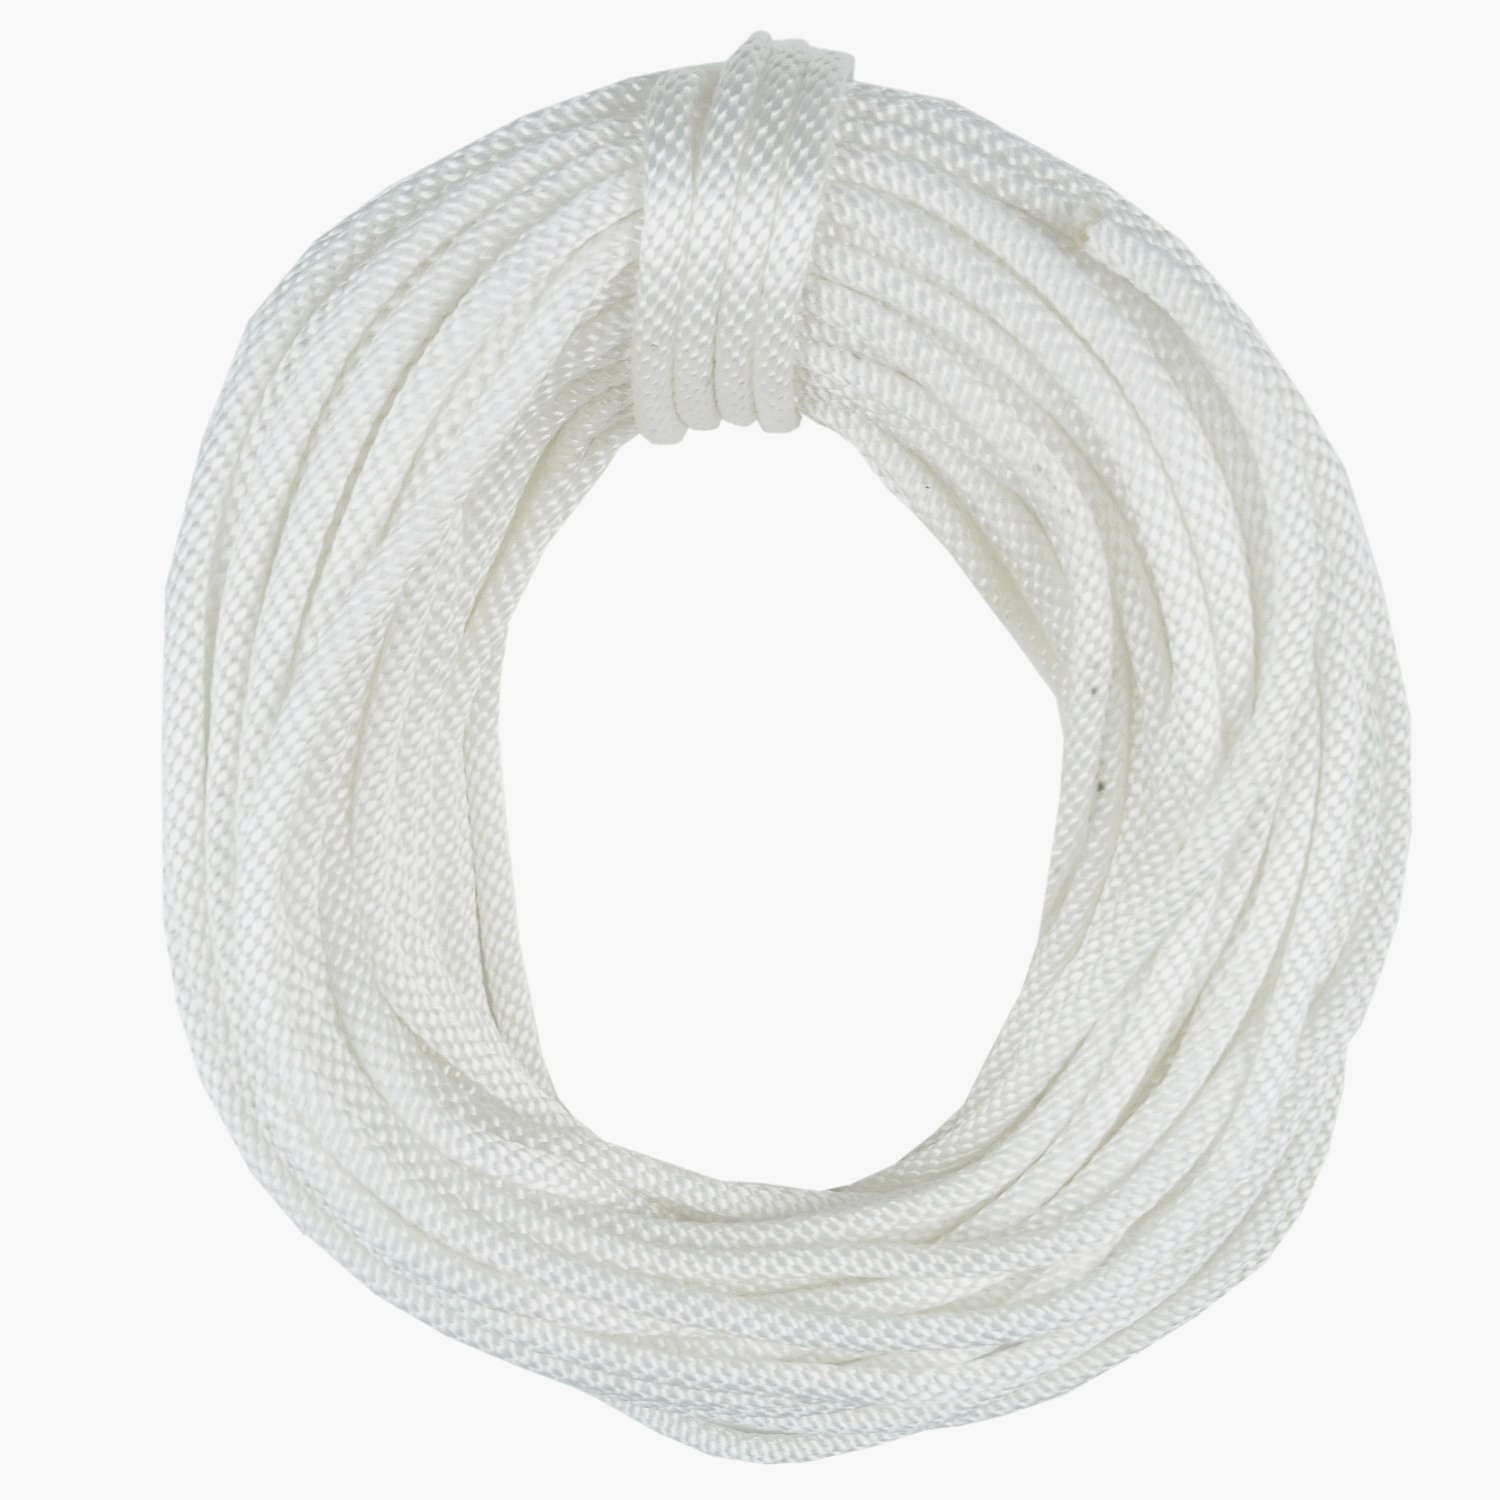 Multi Purpose Line, 3/16 4mm x 100ft 30m Solid Braid Nylon Rope - White